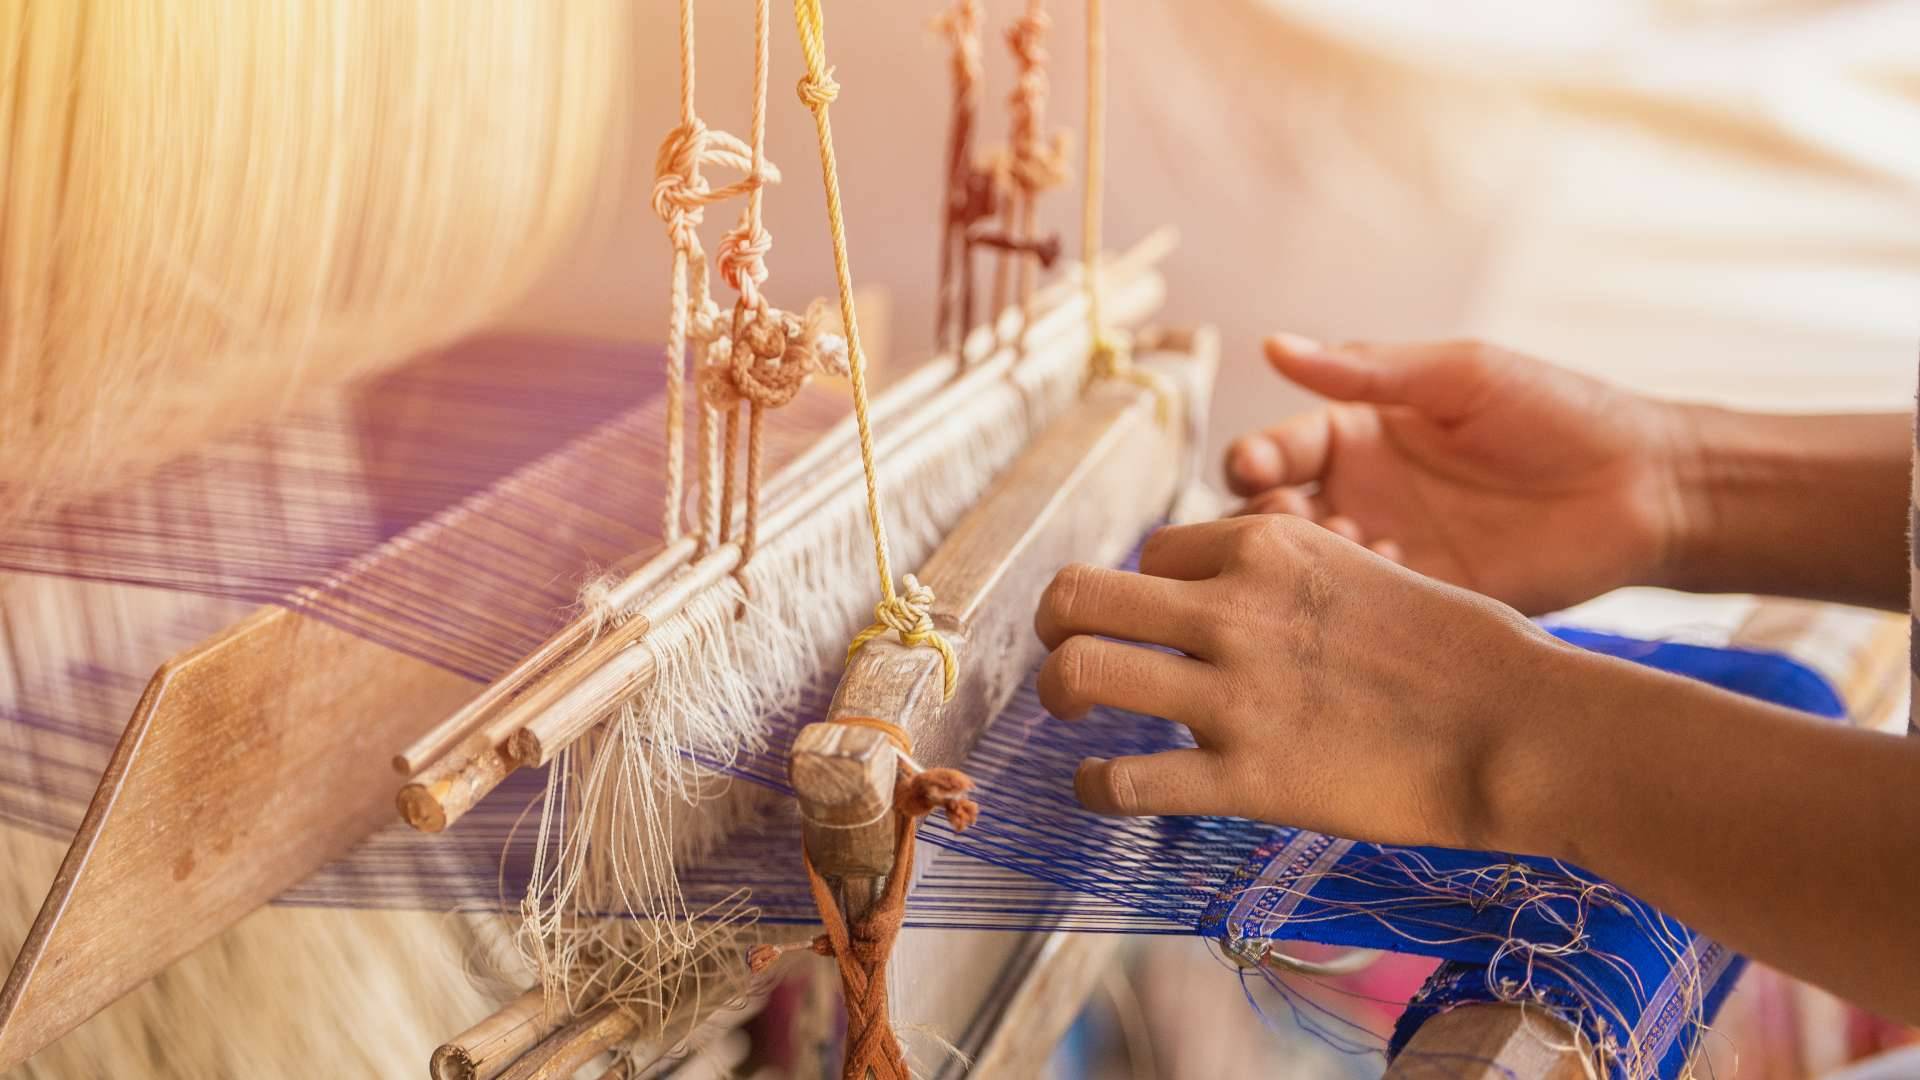 Artisan economy bring local handcraft to global market